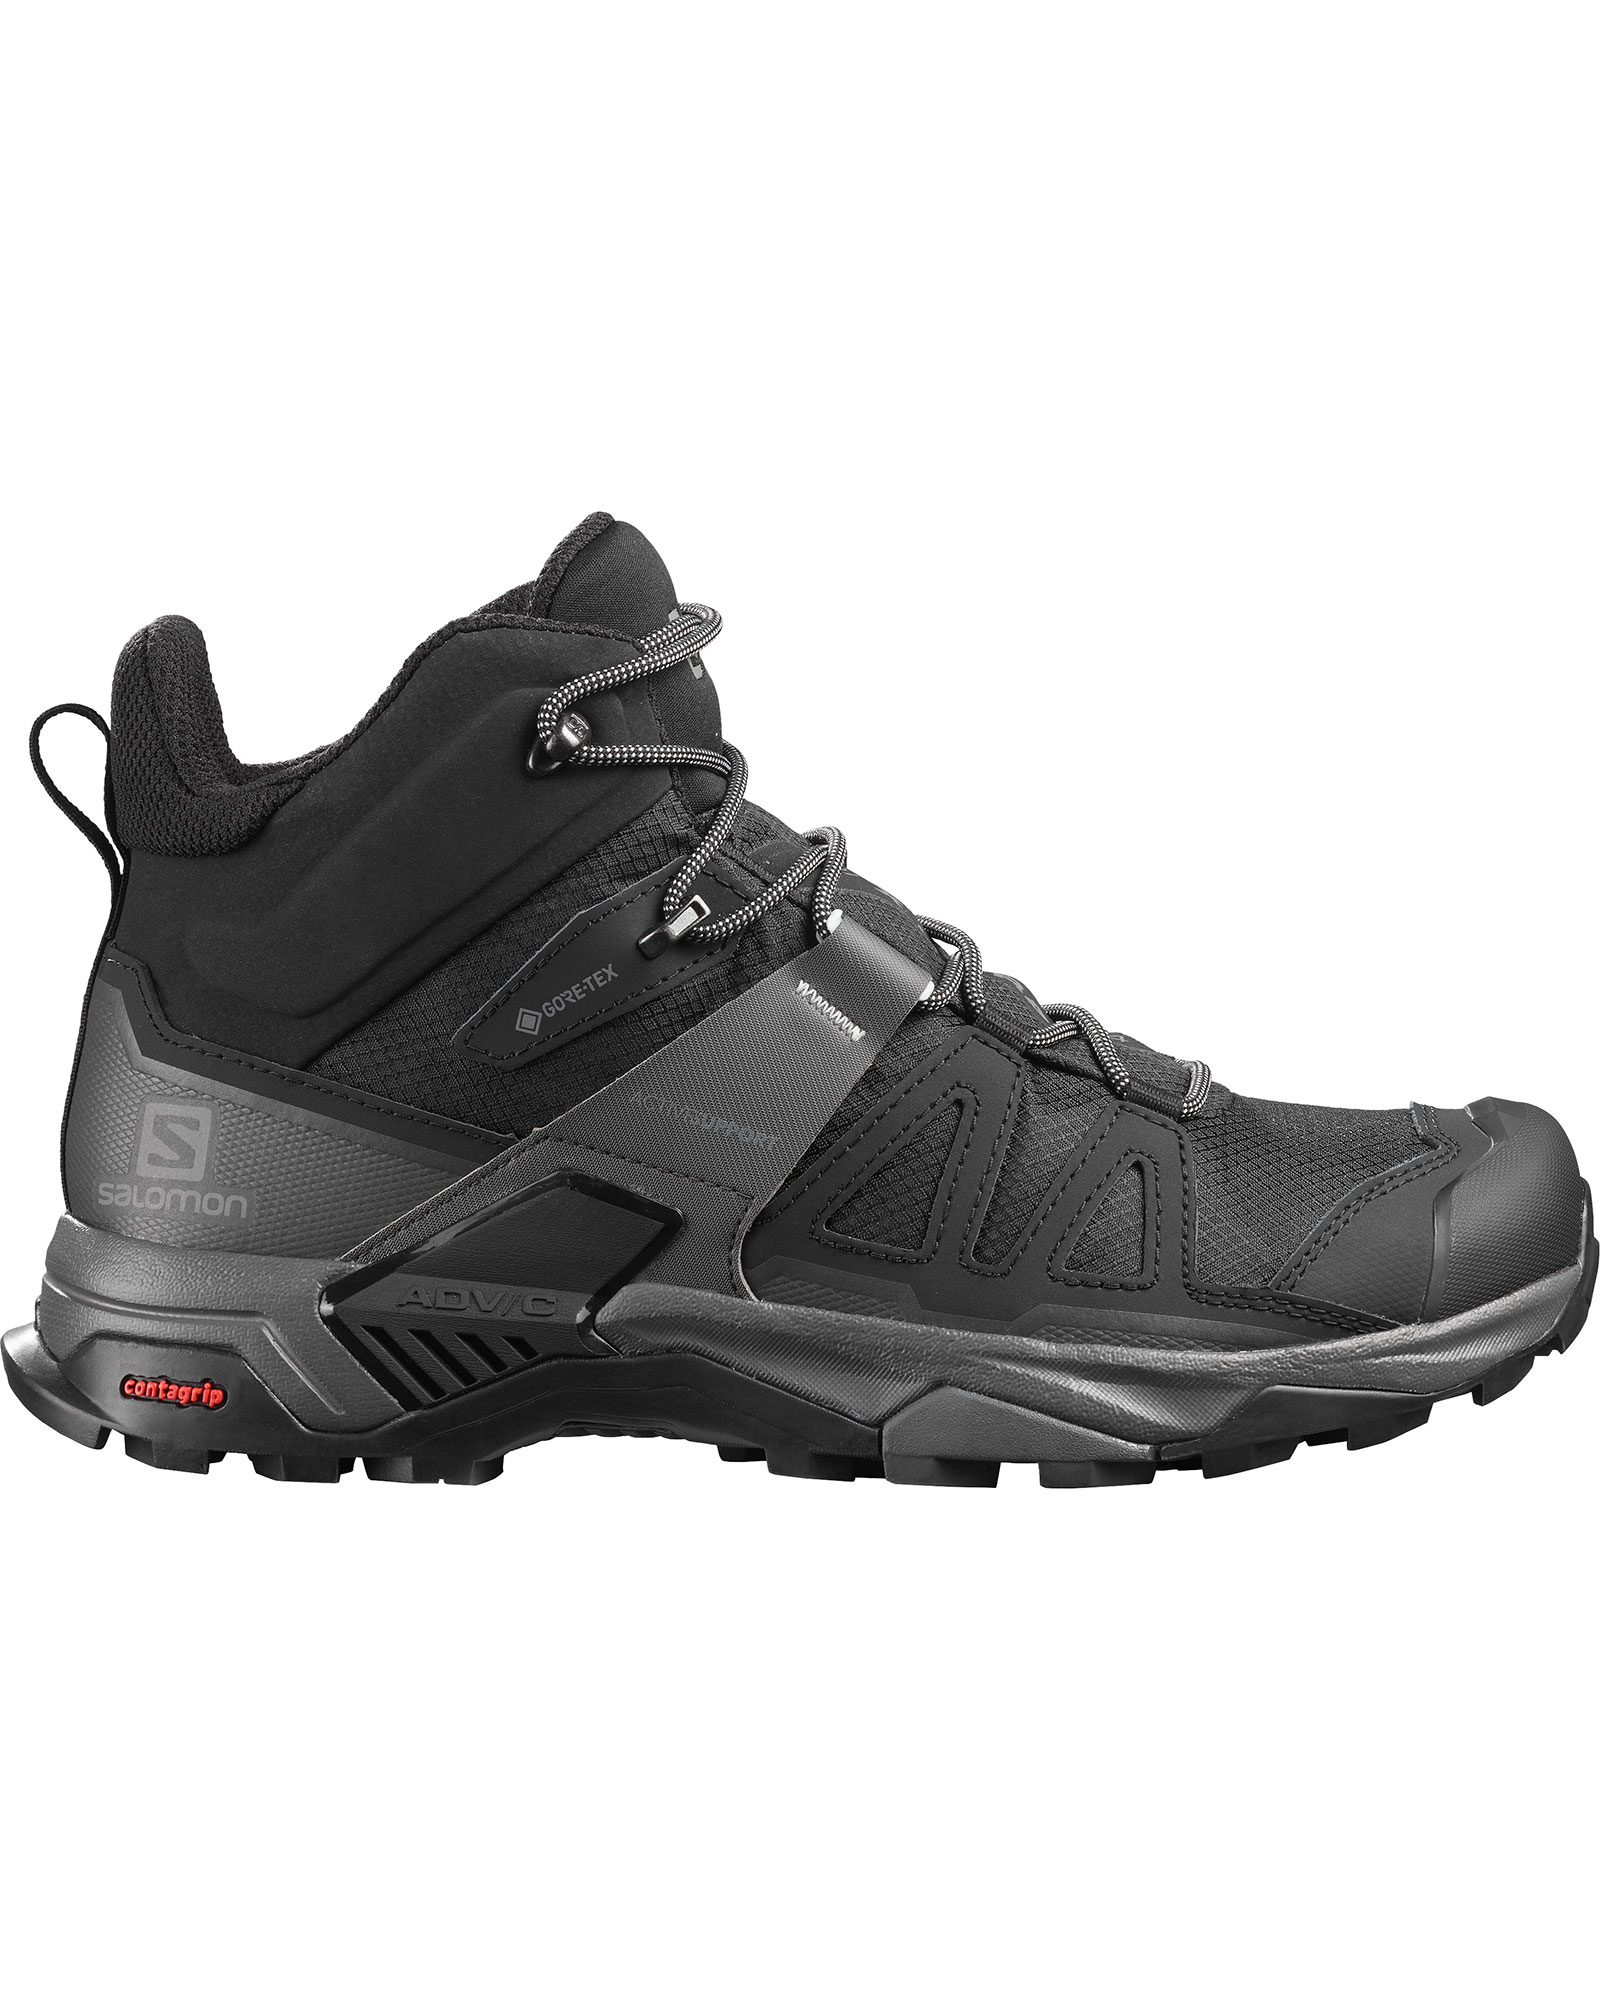 Salomon X Ultra 4 Mid GORE TEX Men’s Boots - Black/Magnet/Pearl Blue UK 10.5